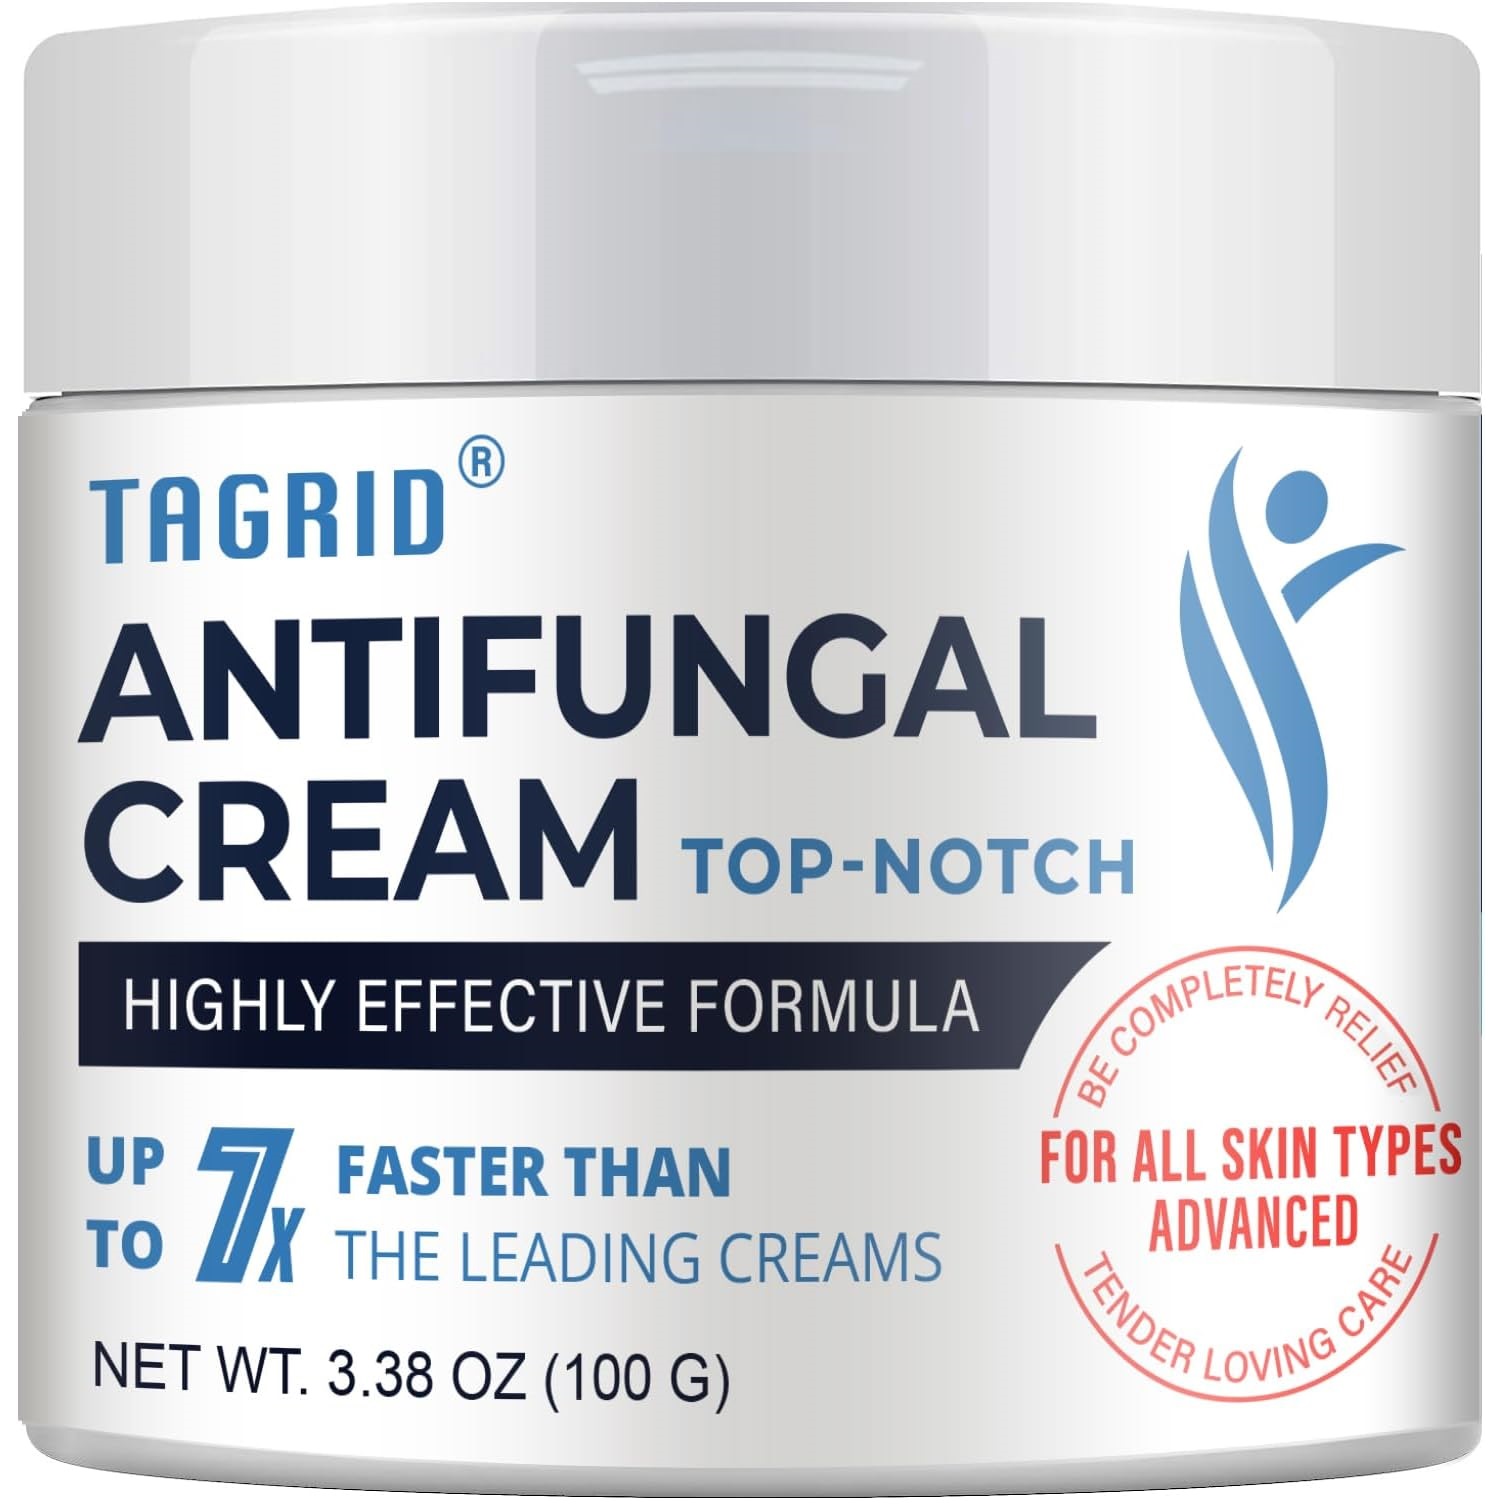 TAGRID Top-Notch Antifungal Cream